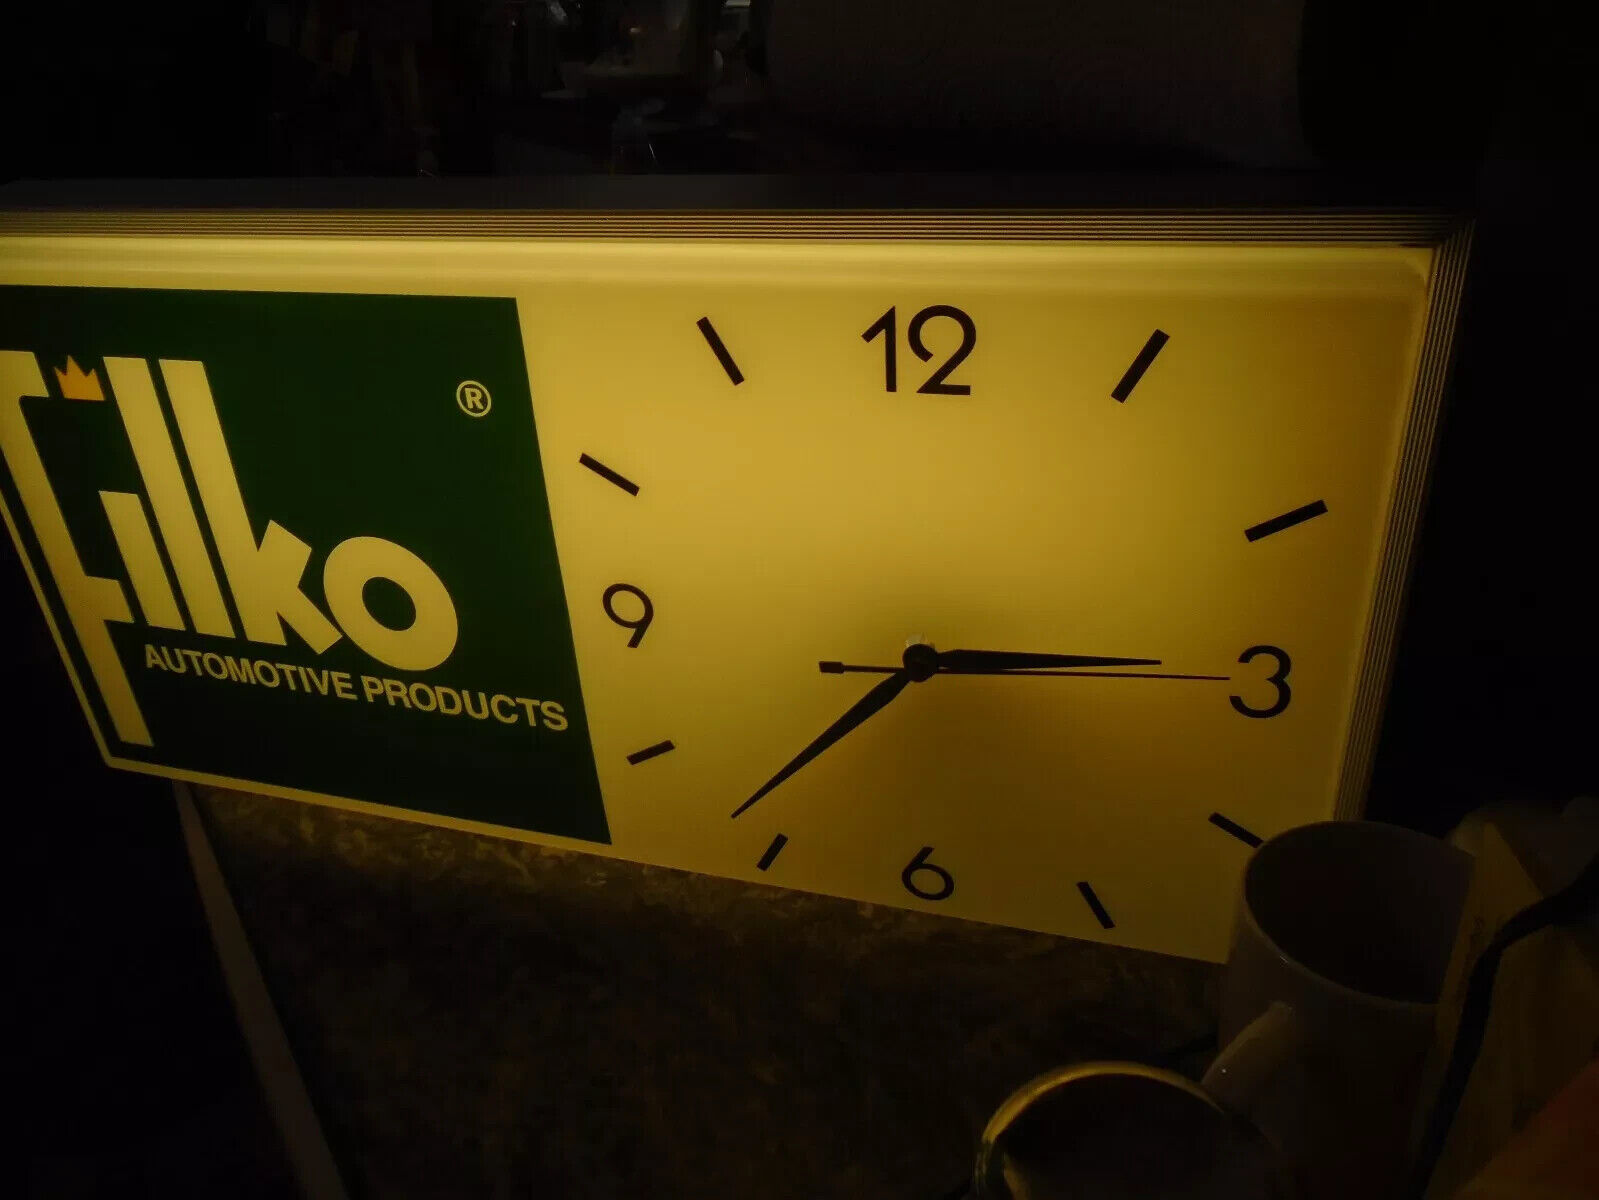 Filco auto products Vintage clocks